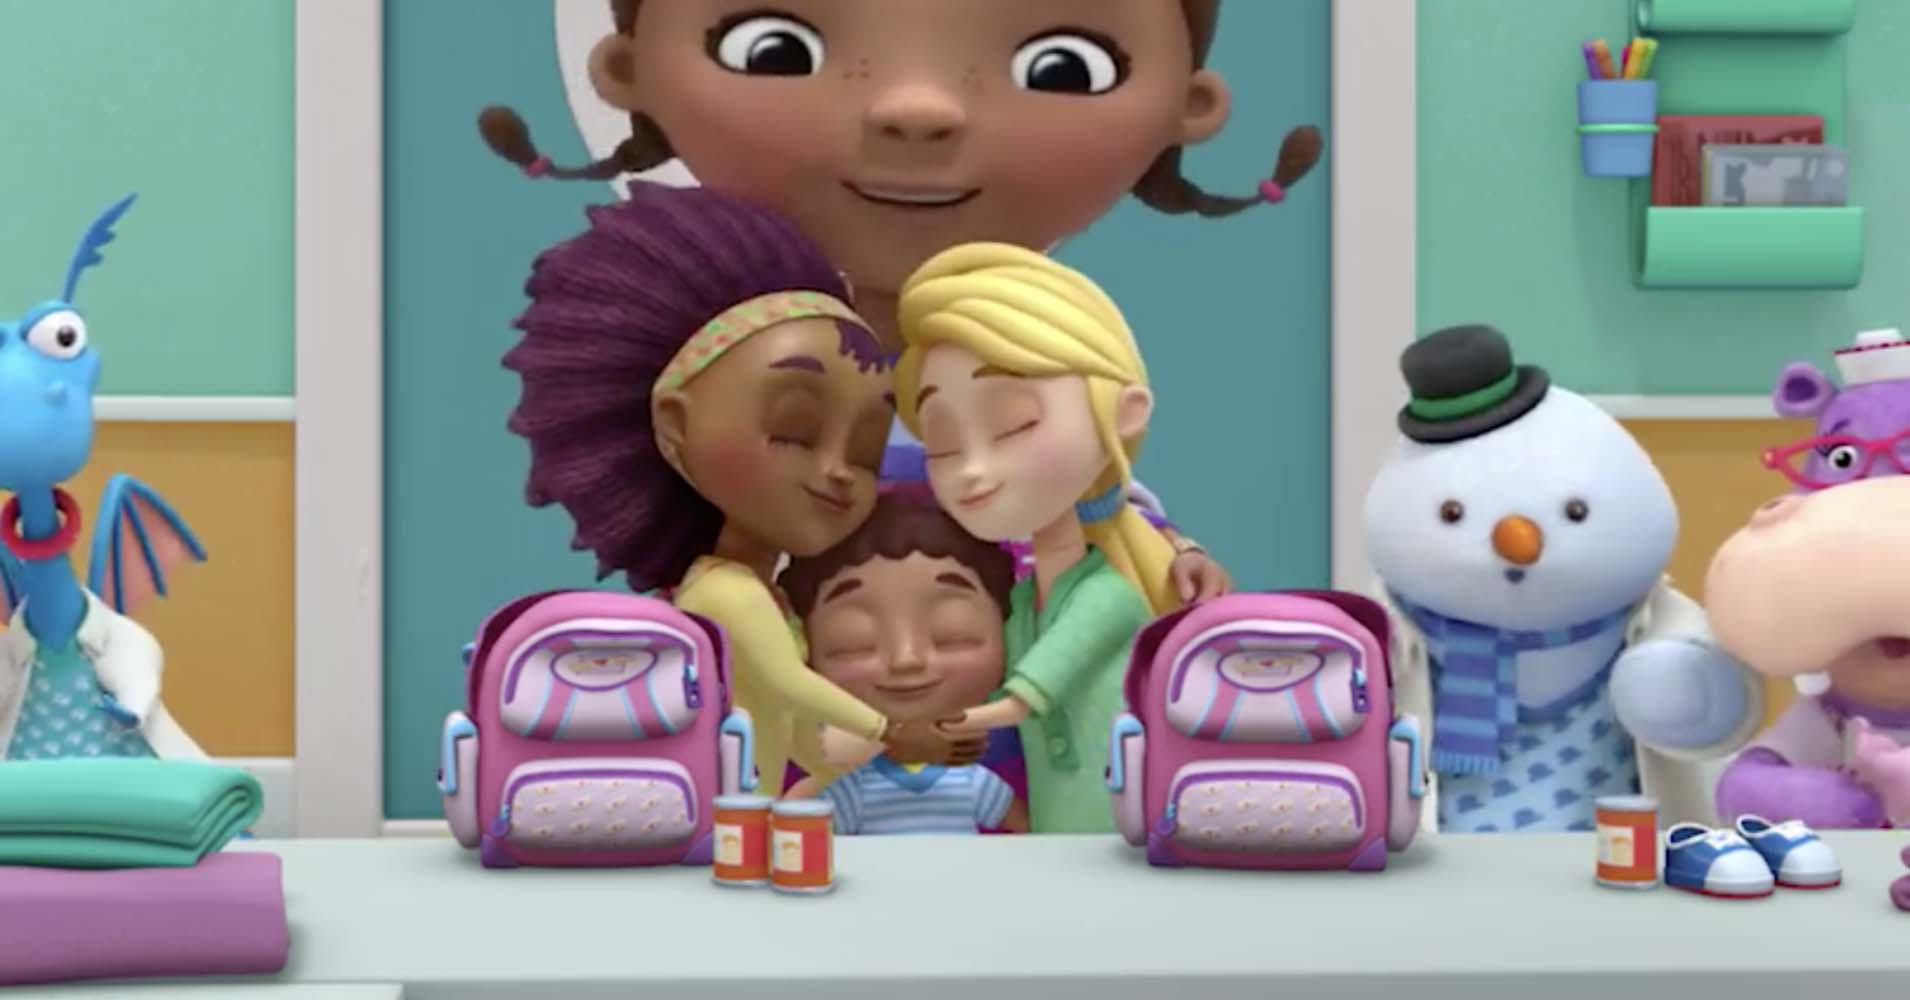 Disney features queer parents on children's television show